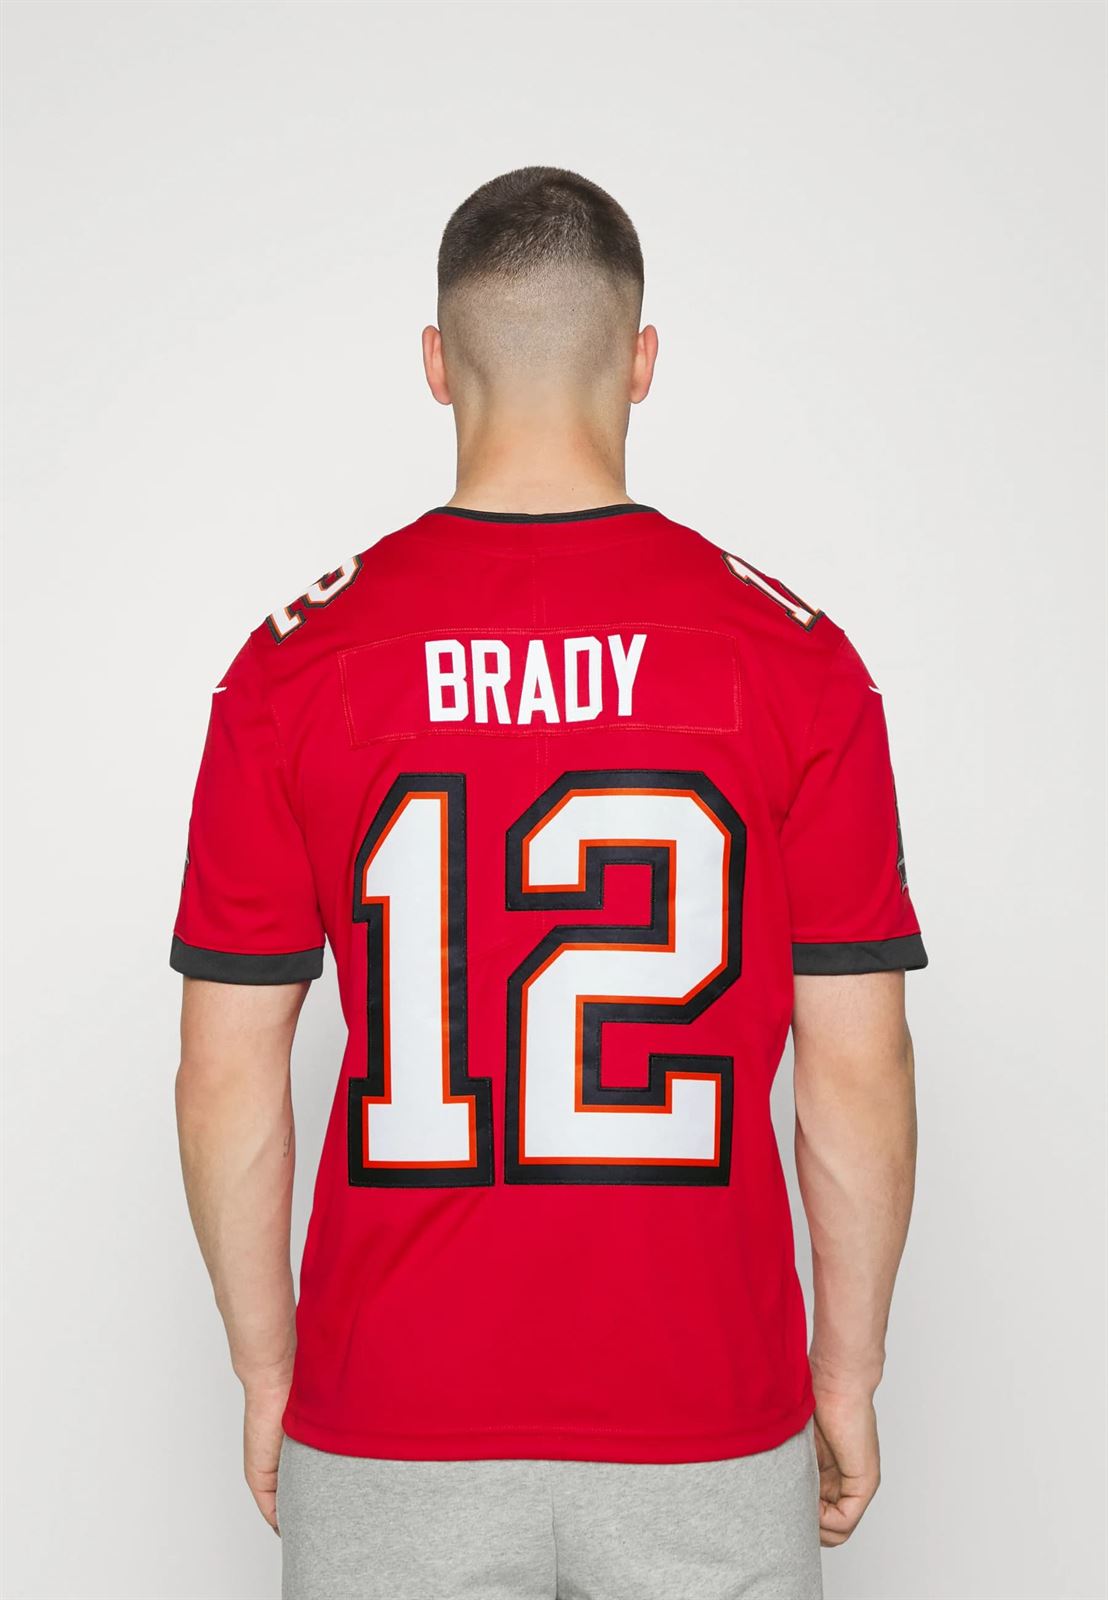 Camiseta Nike Brady 94NM-HLTB-8BF-1WE red - Imagen 3